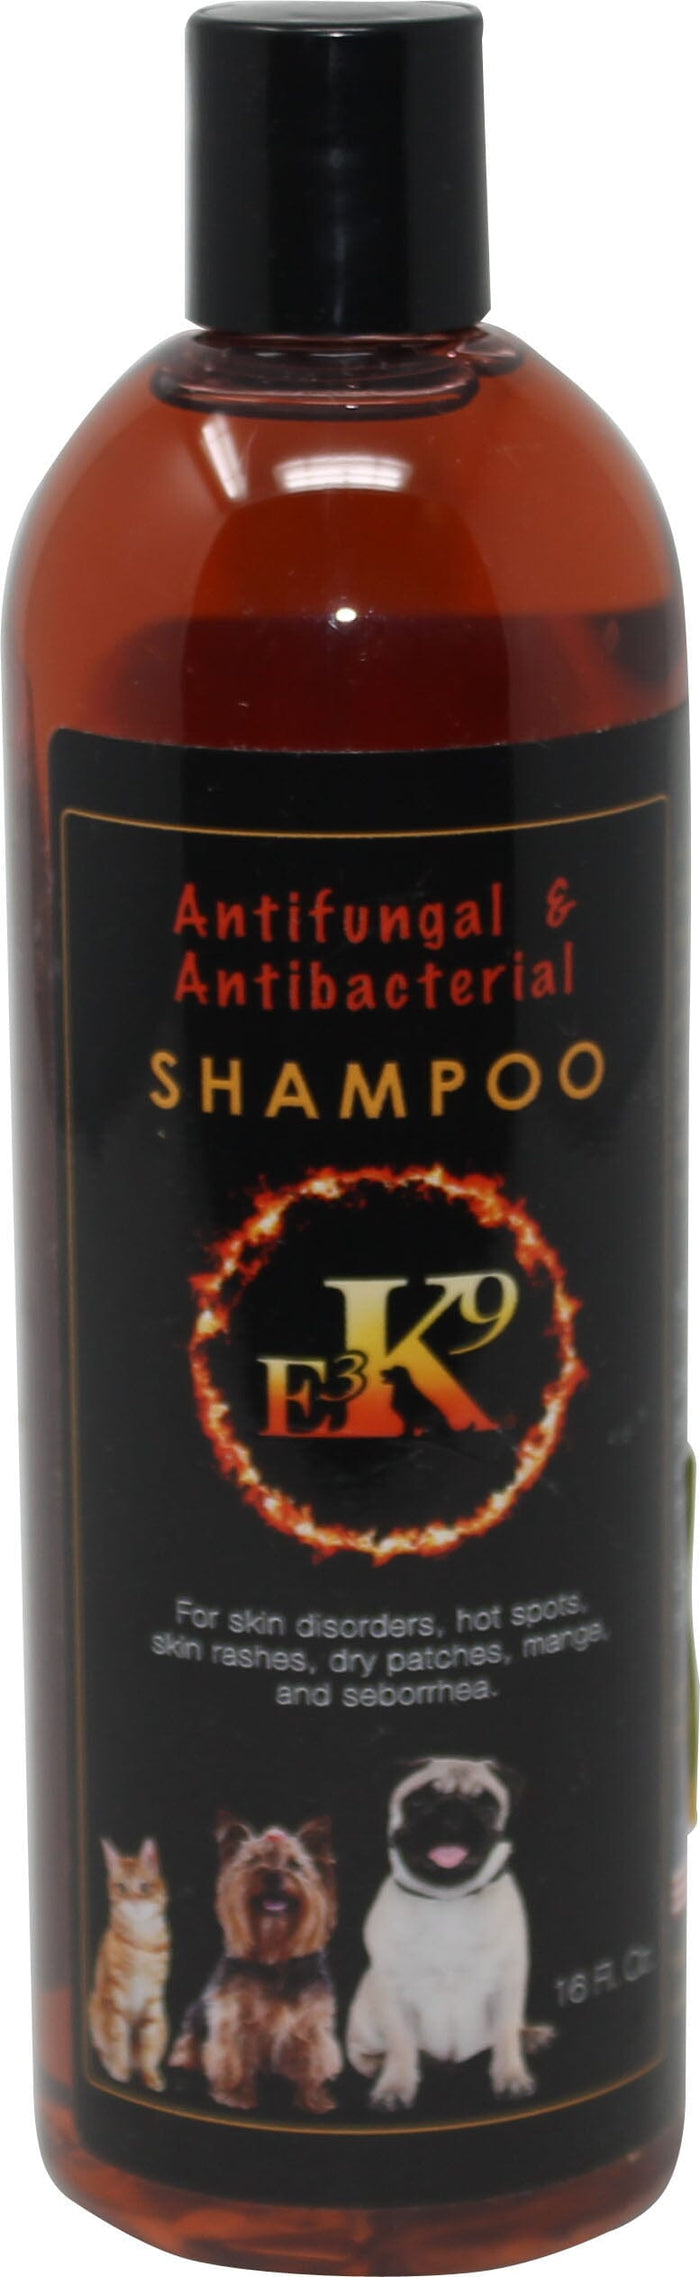 E3 K9 Antifungal & Antibacterial Dog Shampoo - 16 Oz